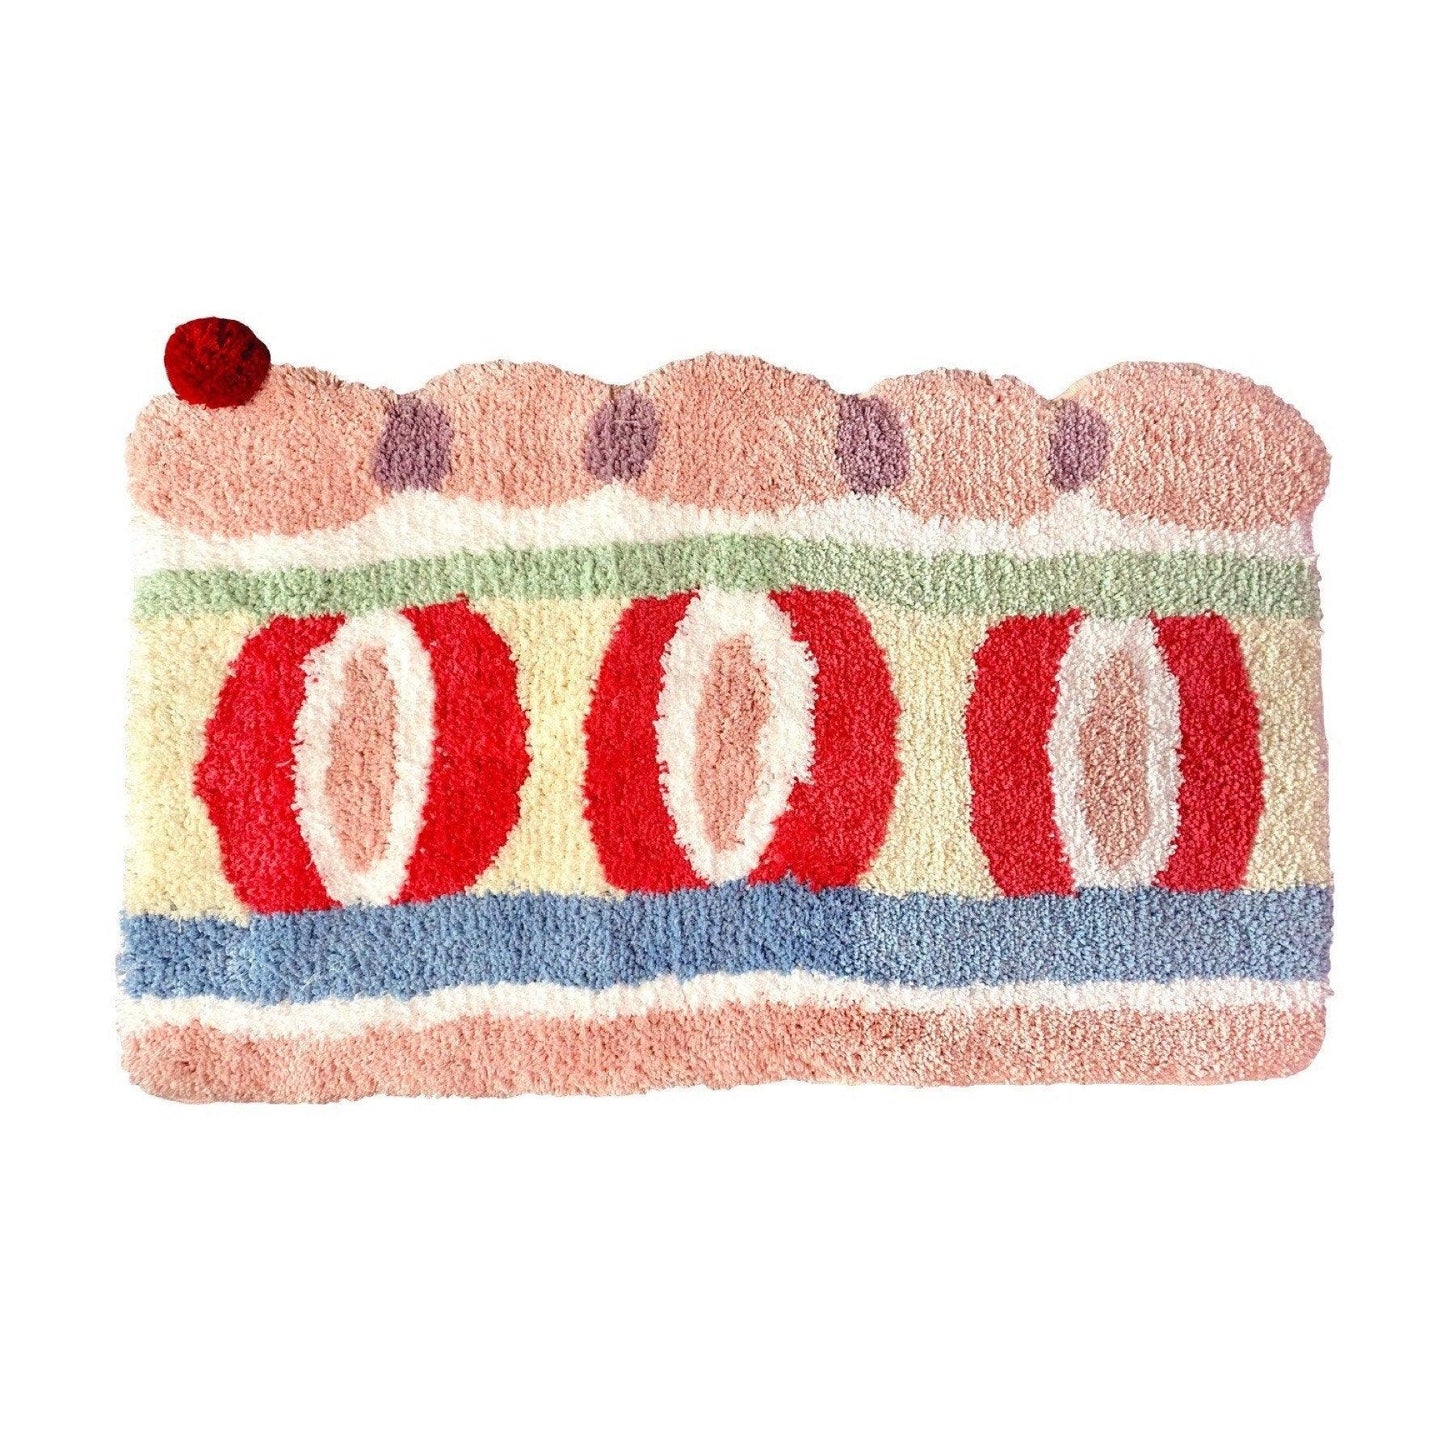  Strawberry Cake Rug 